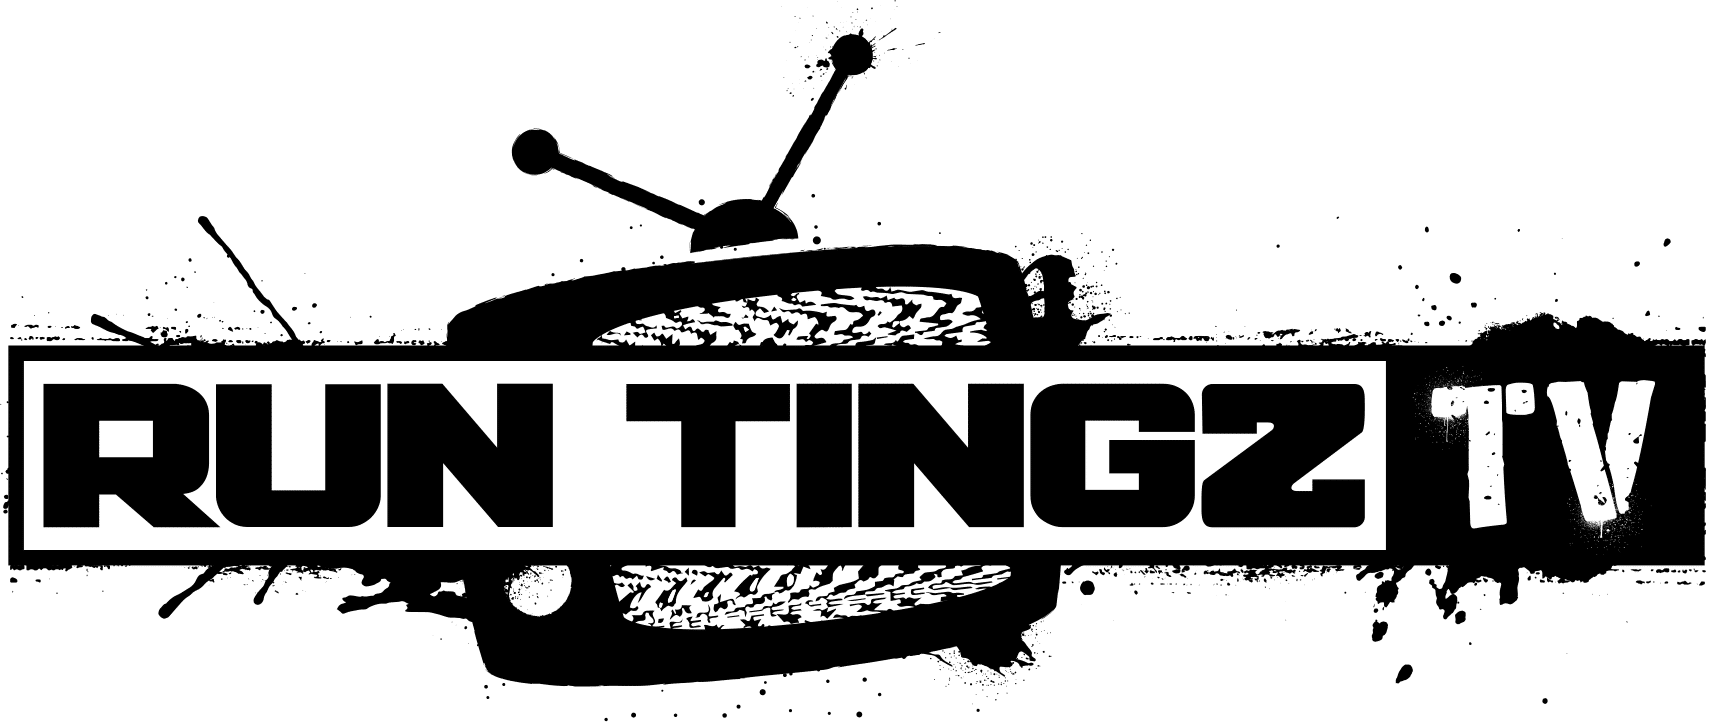 Run tingz tv logo